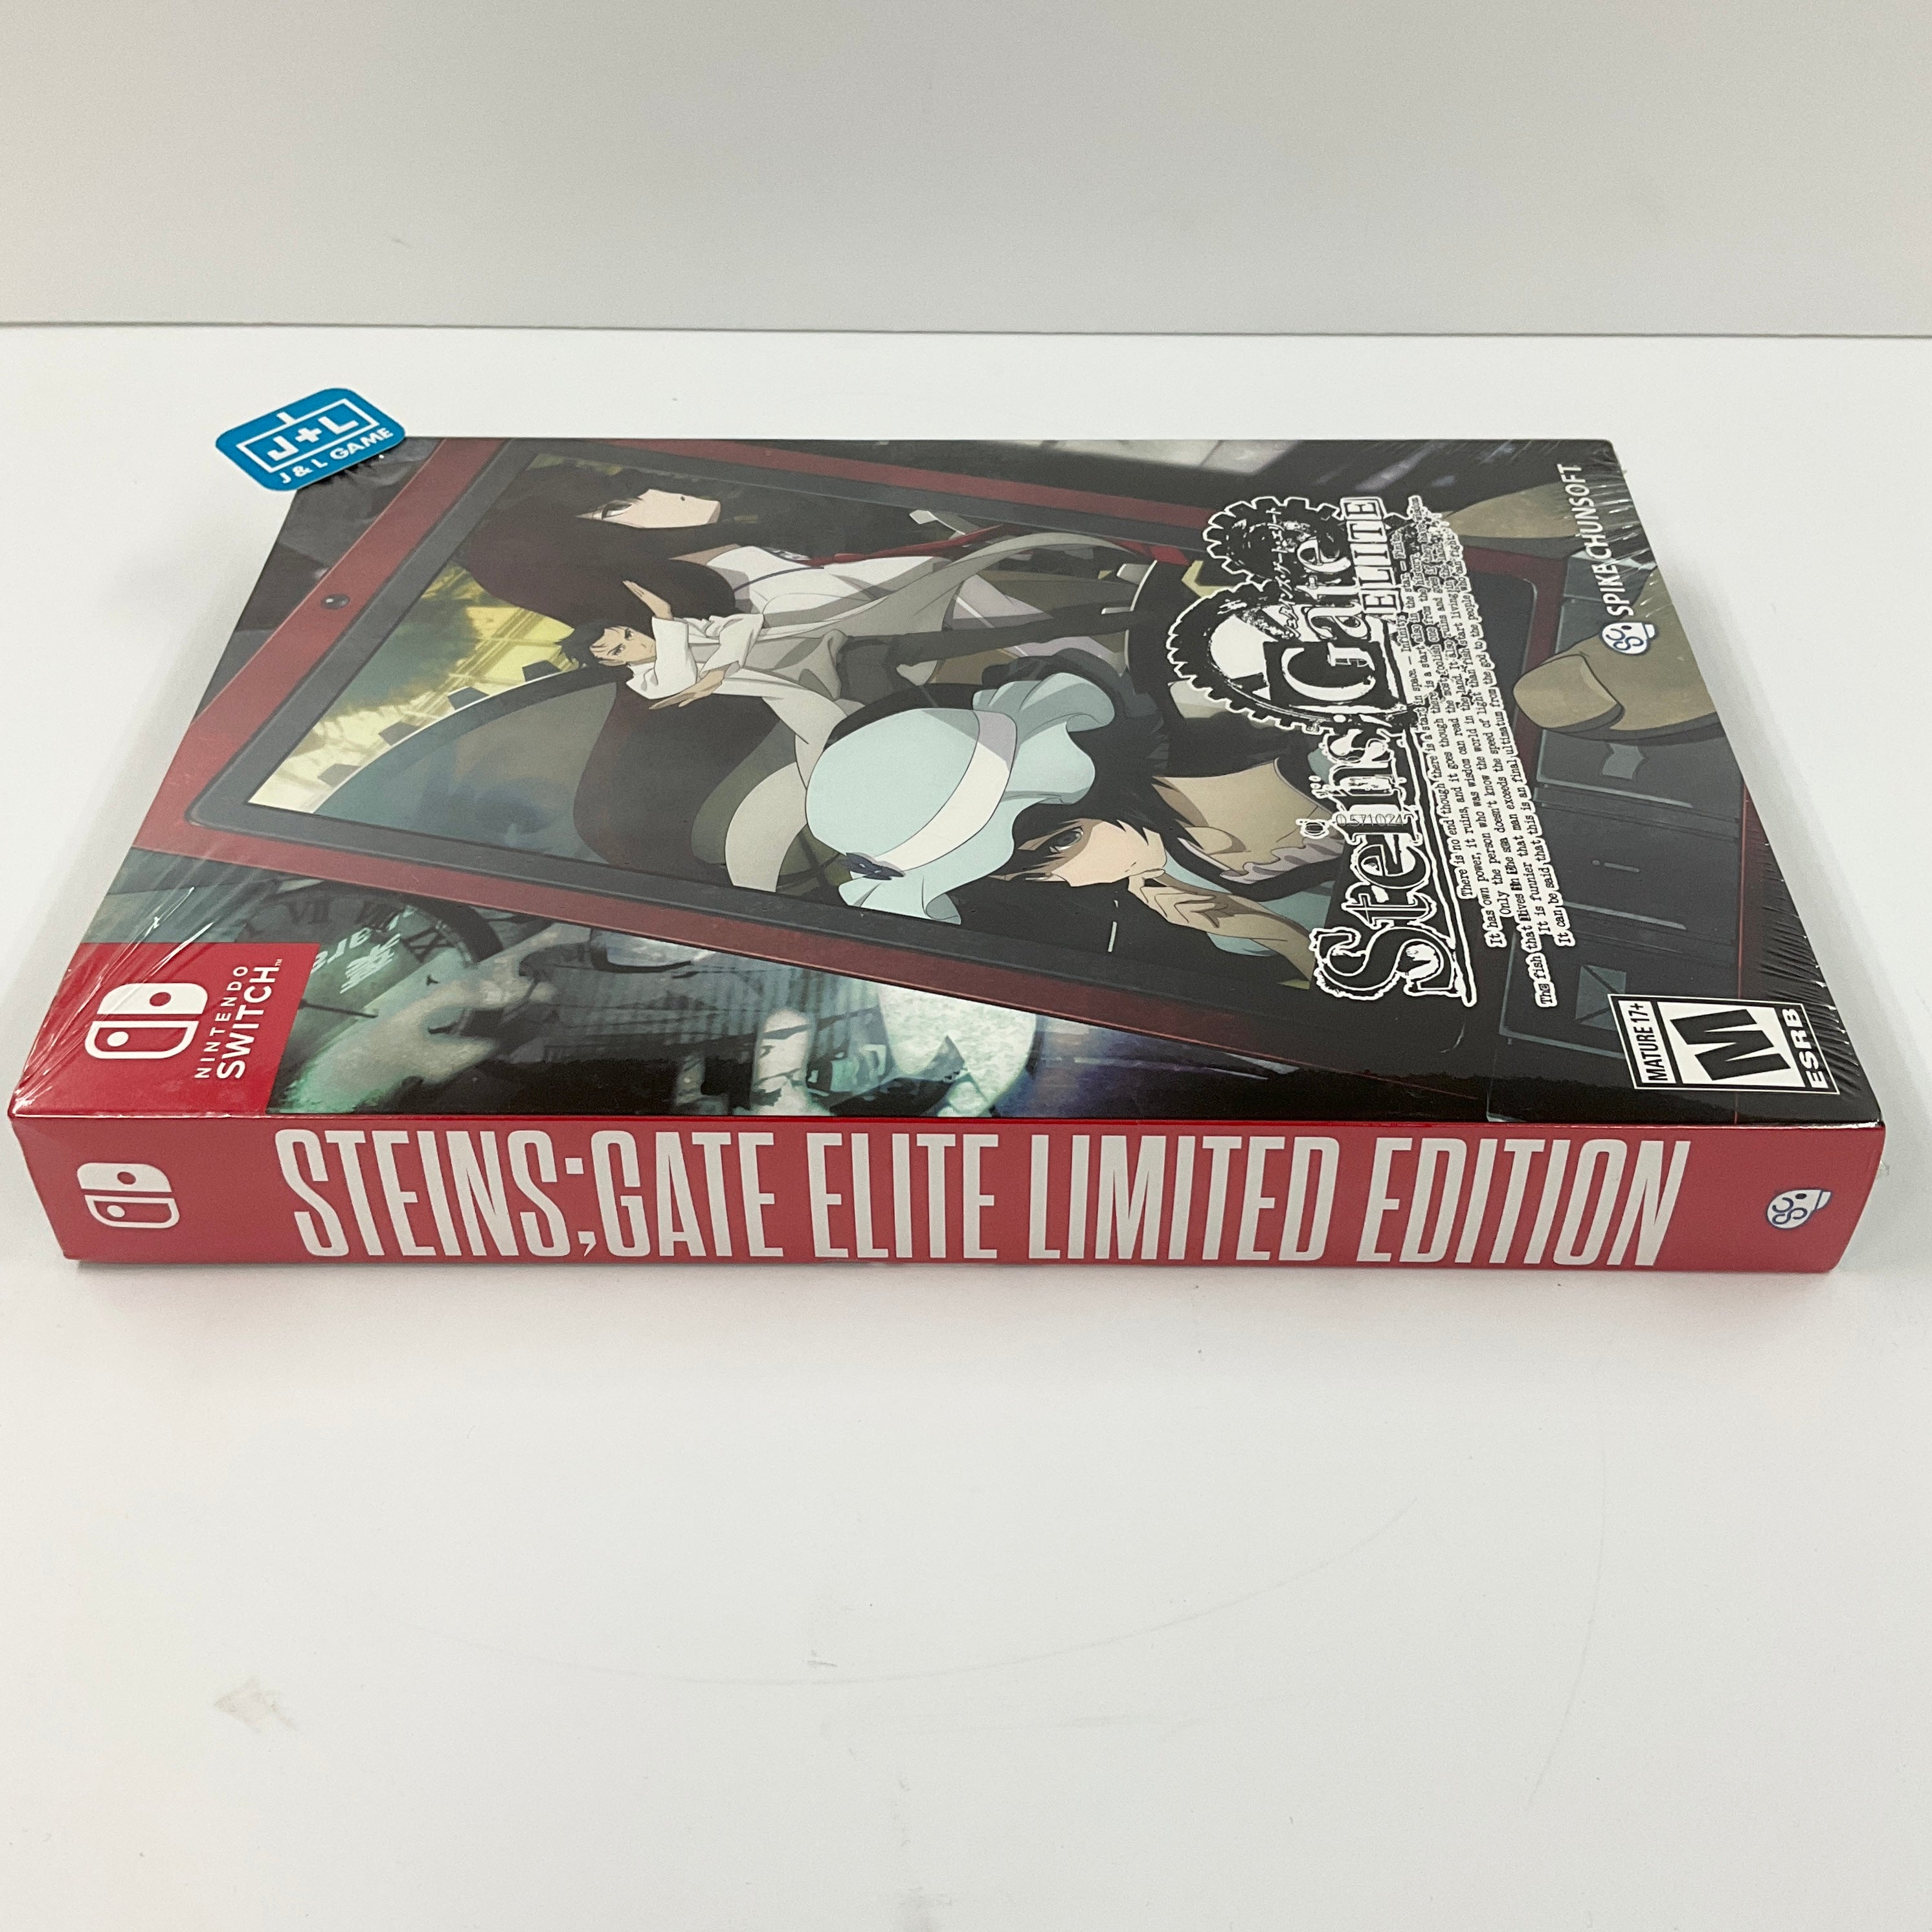 STEINS;GATE ELITE (Limited Edition) - (NSW) Nintendo Switch